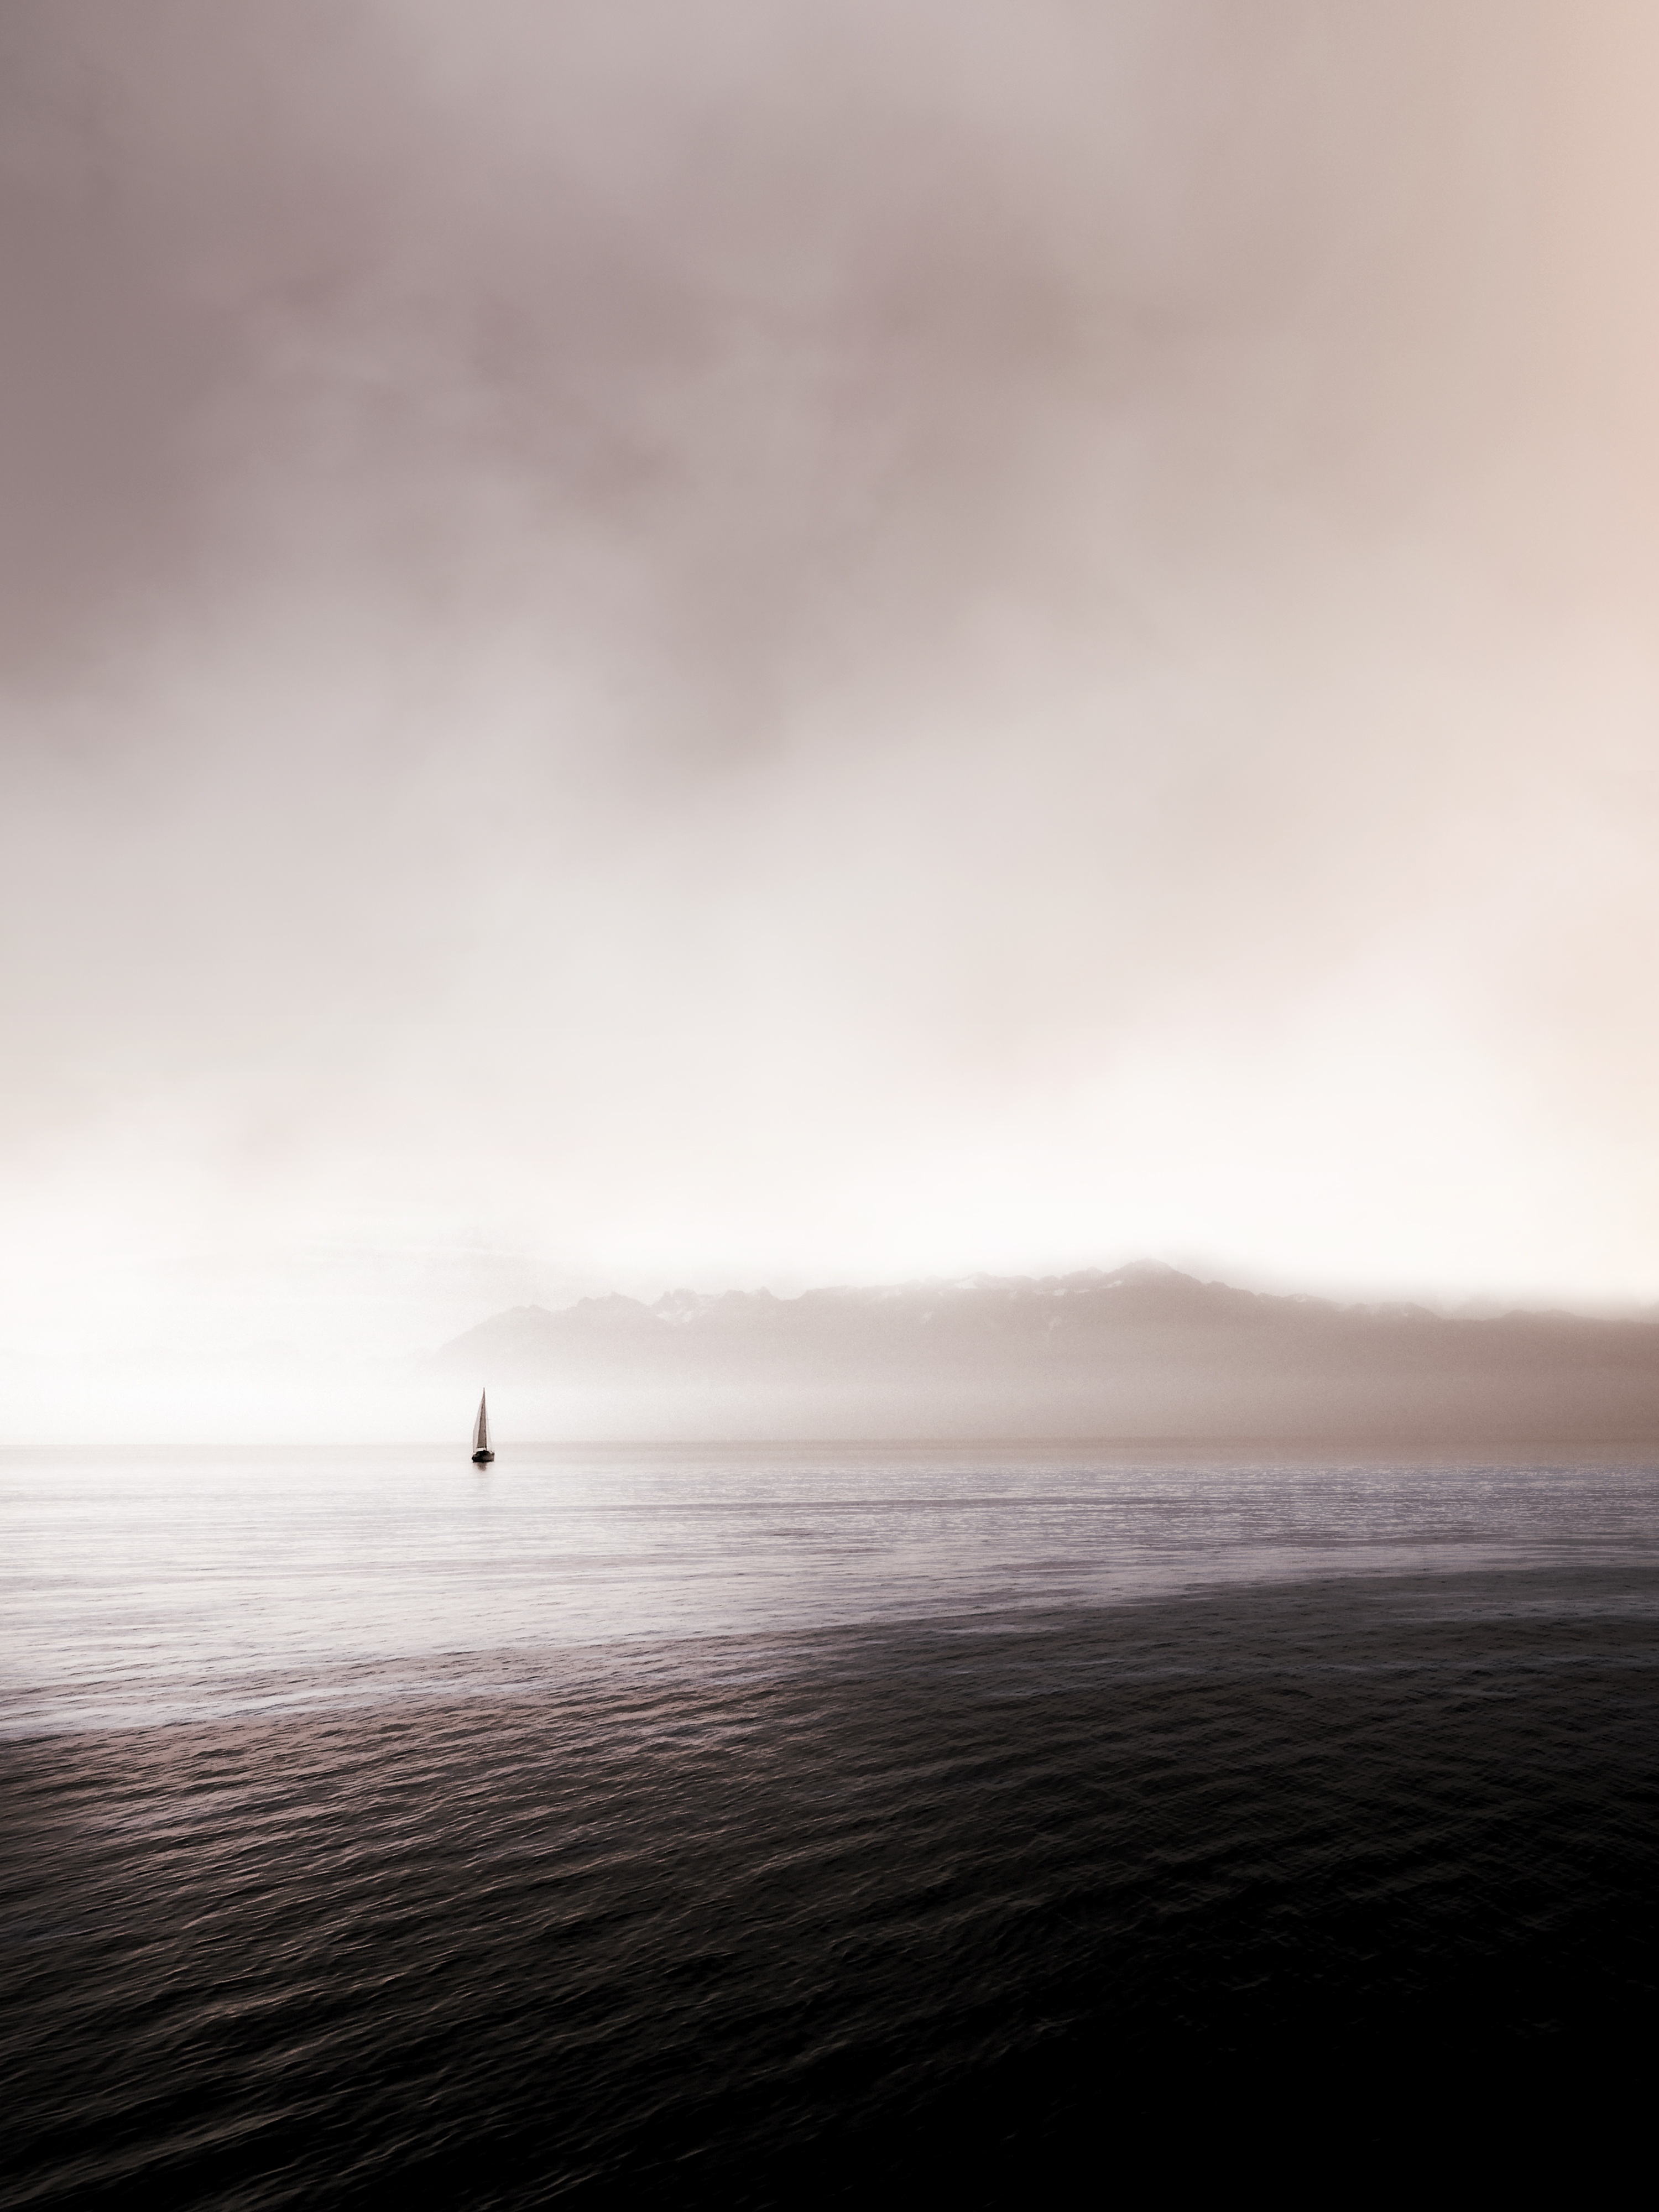 Free HD sailboat, nature, sea, waves, fog, dahl, distance, sailfish